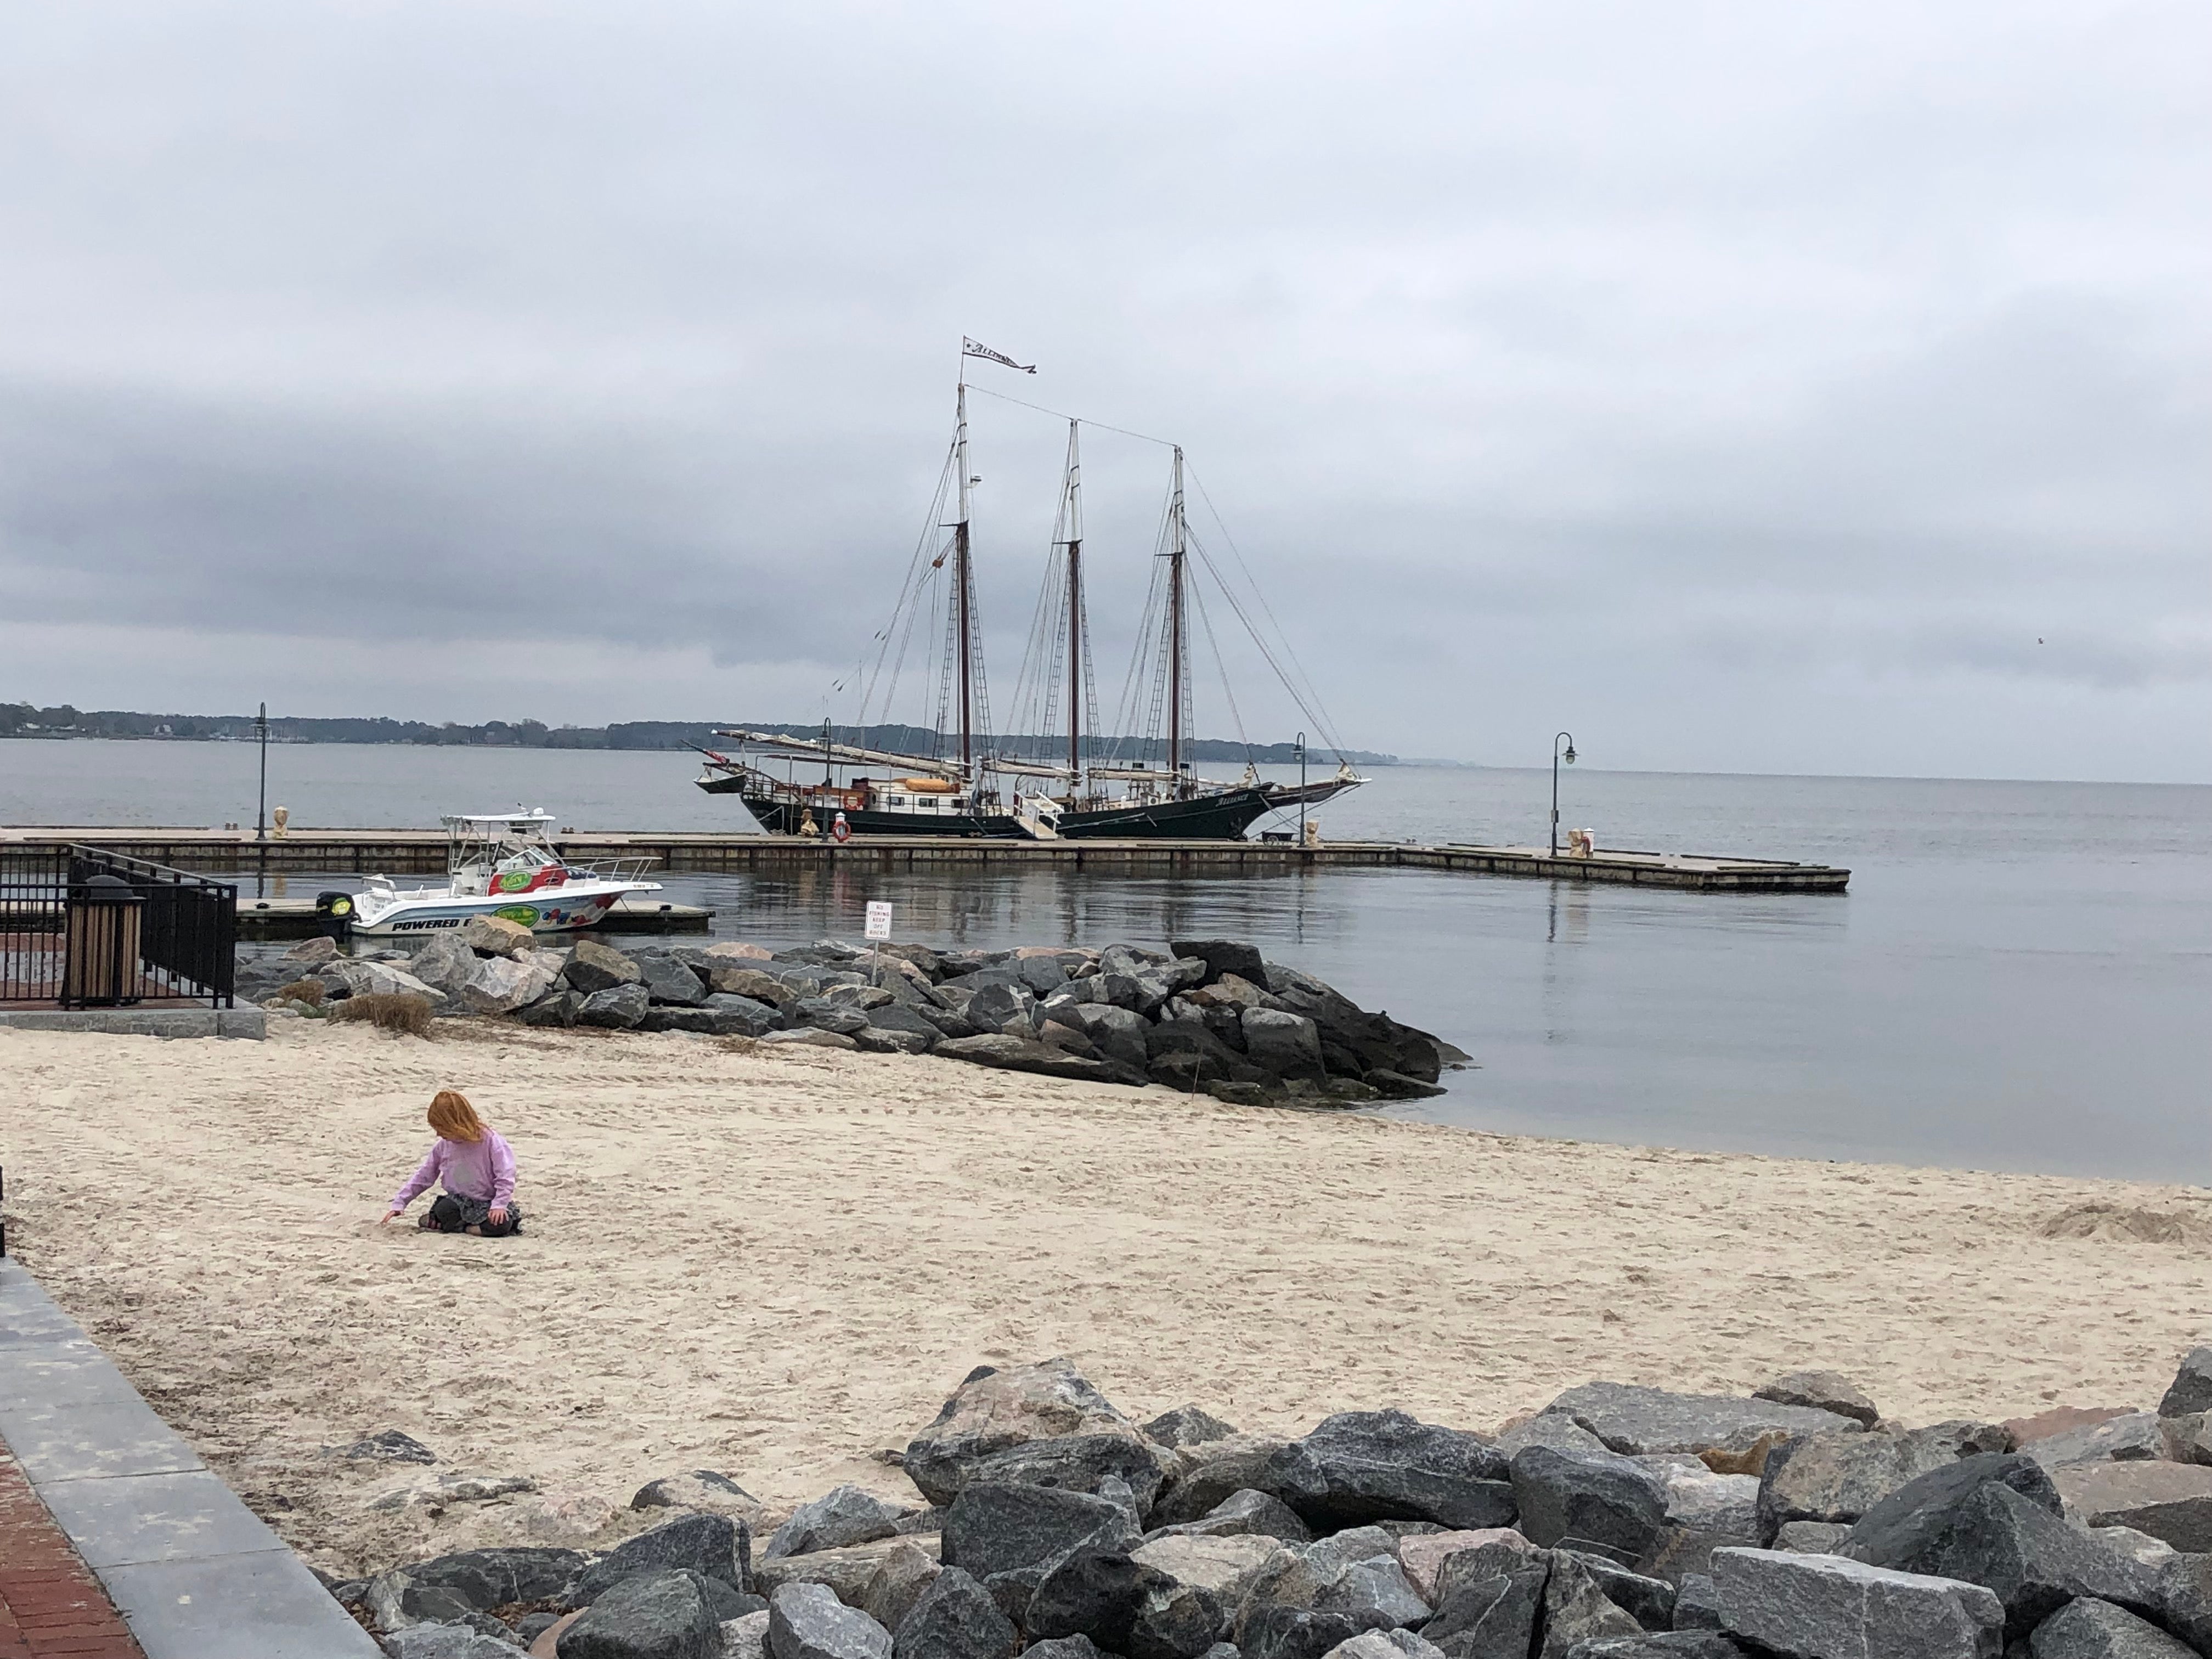 Activities nearby: Downtown Yorktown, schooner, and beach.